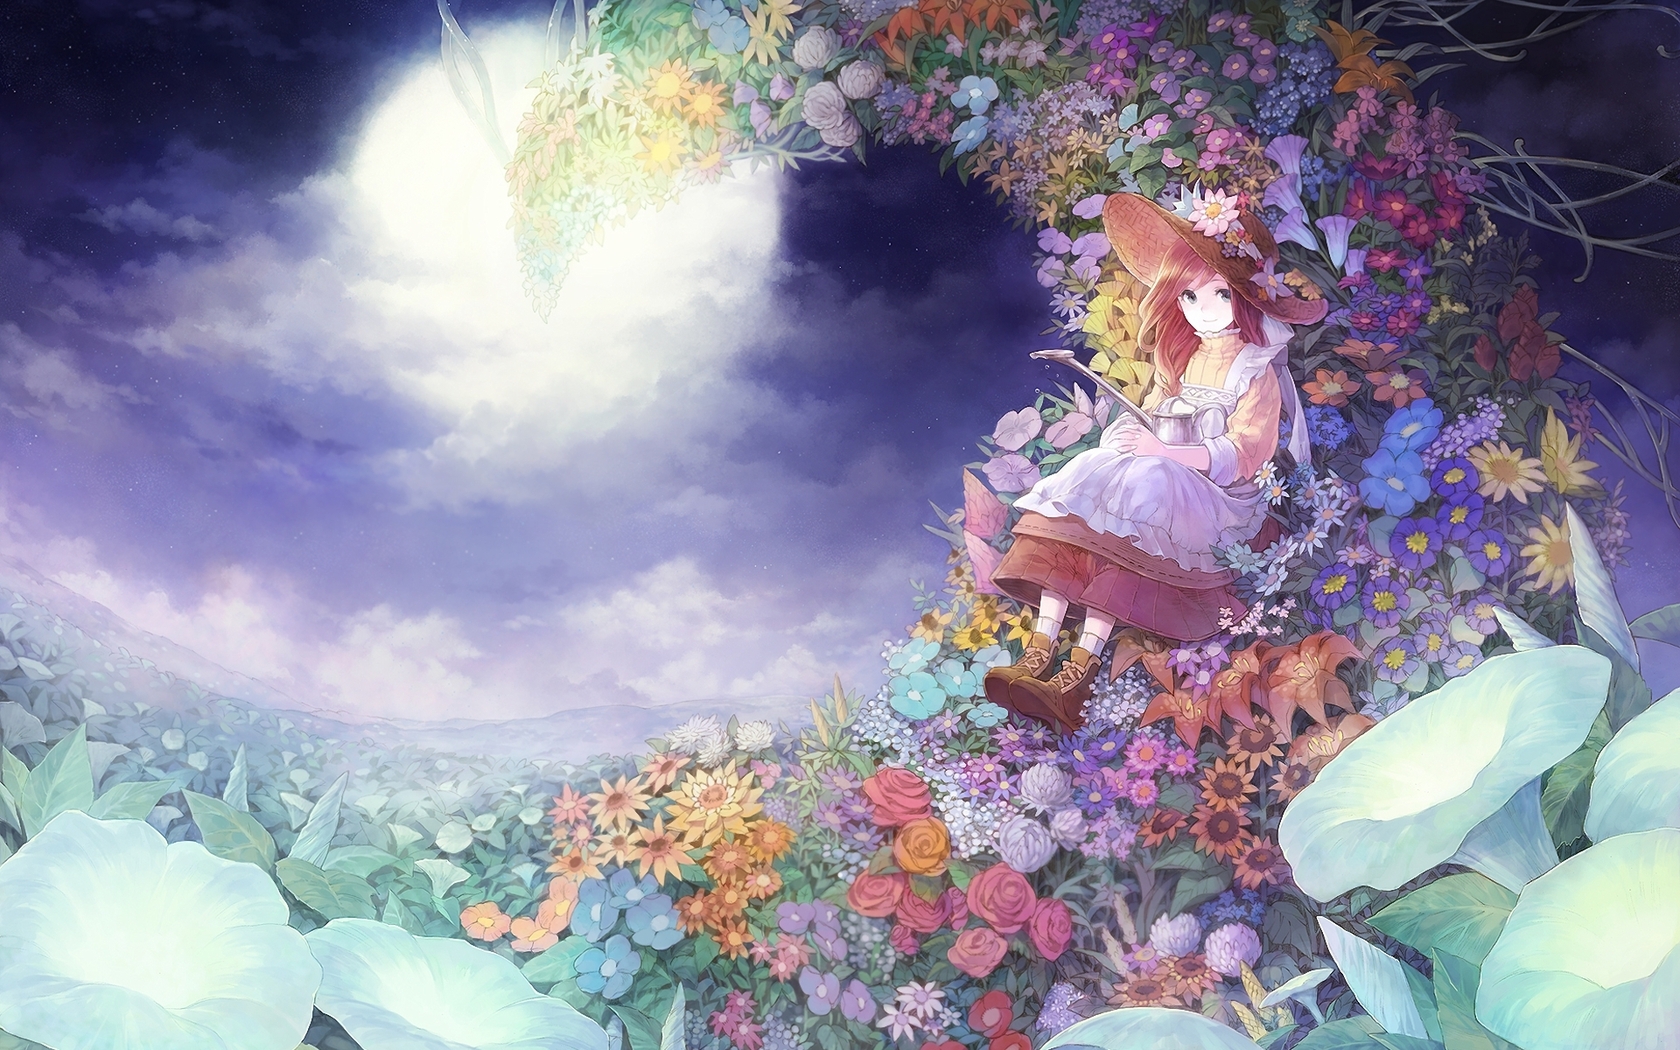 Anime 1680x1050 anime anime girls women sitting flowers plants Moon sky looking at viewer hat dress fantasy art fantasy girl original characters